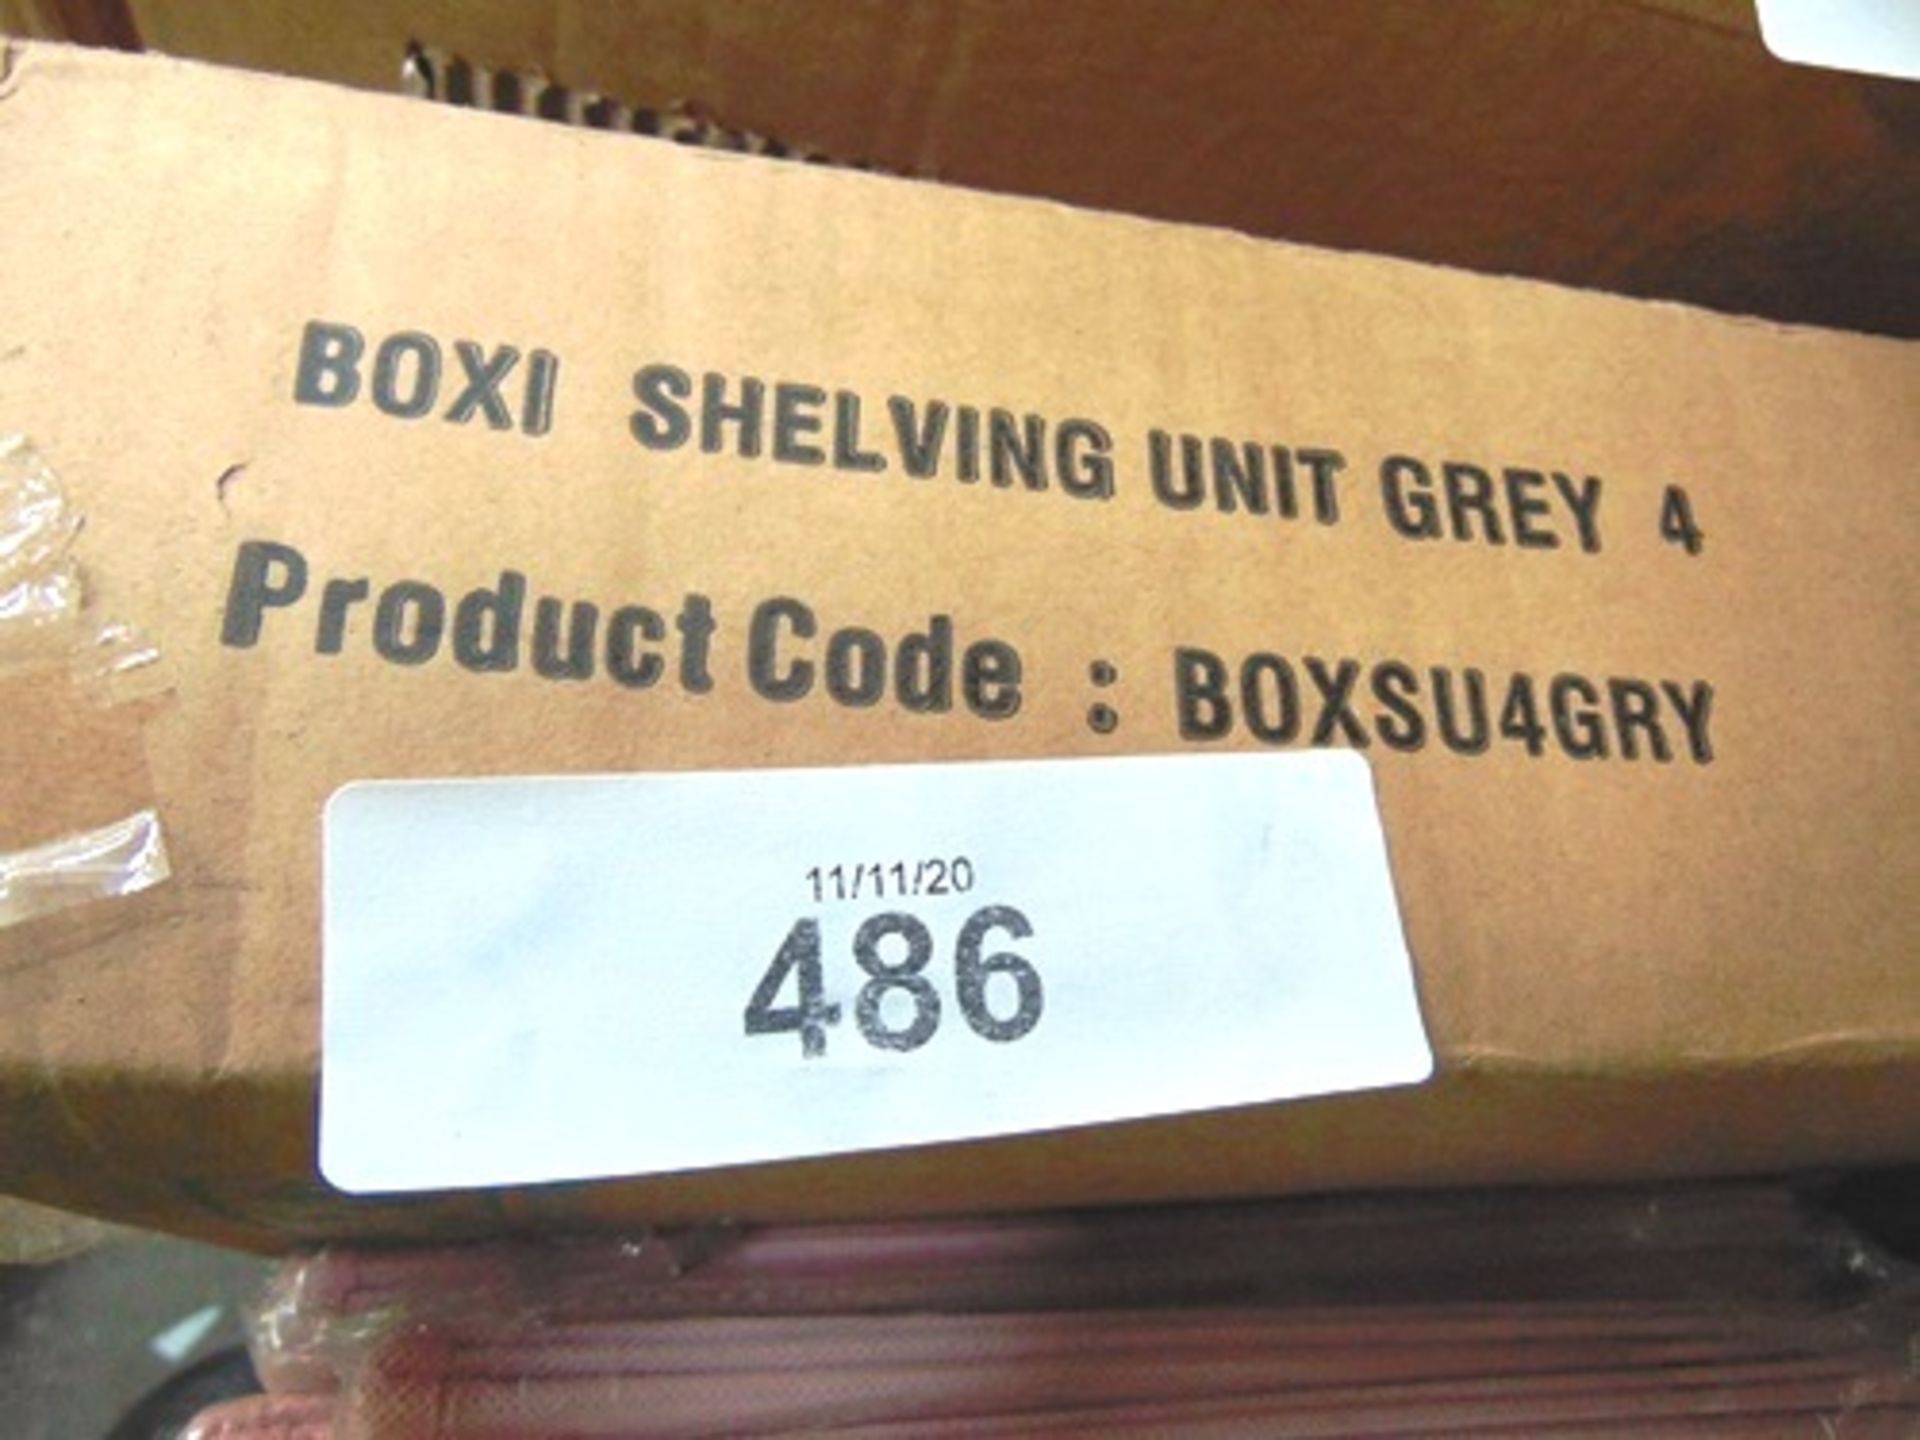 1 x Britea Boxi shelf unit, product code BOXULGRY, 1 x Zomo box shelf unit, Art No. 0030/02385 - Image 2 of 5